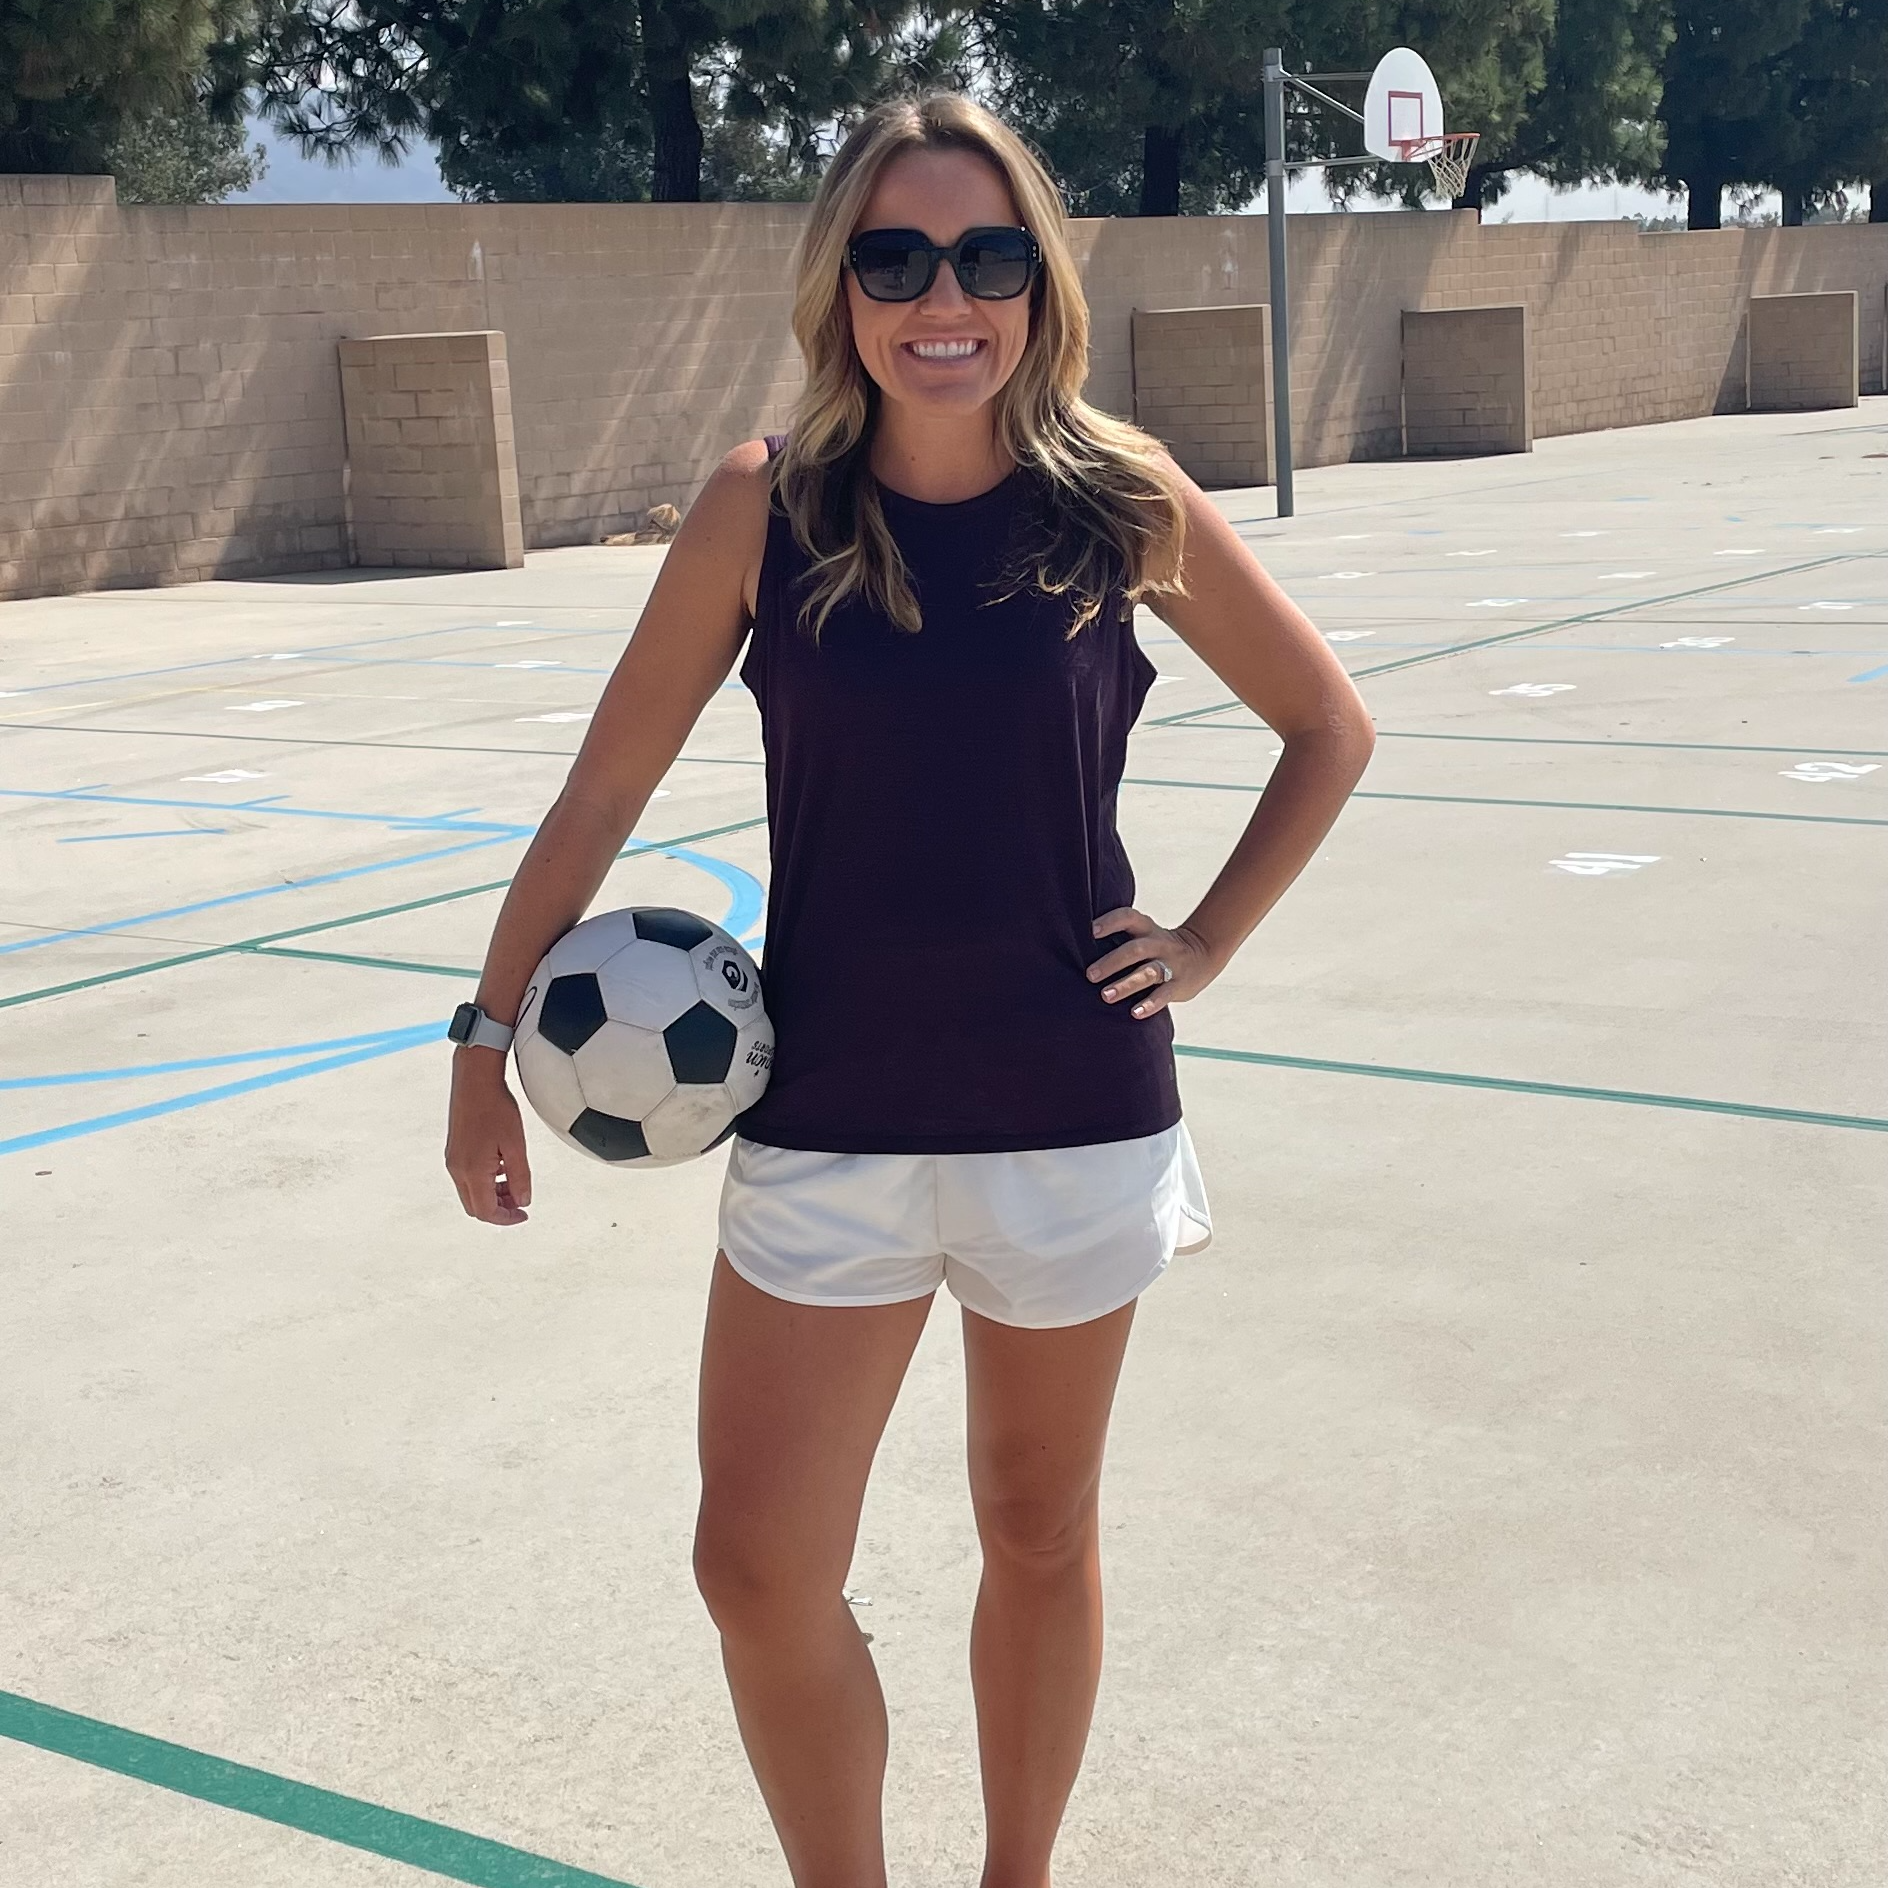 Kellie Beitler holding a soccerball